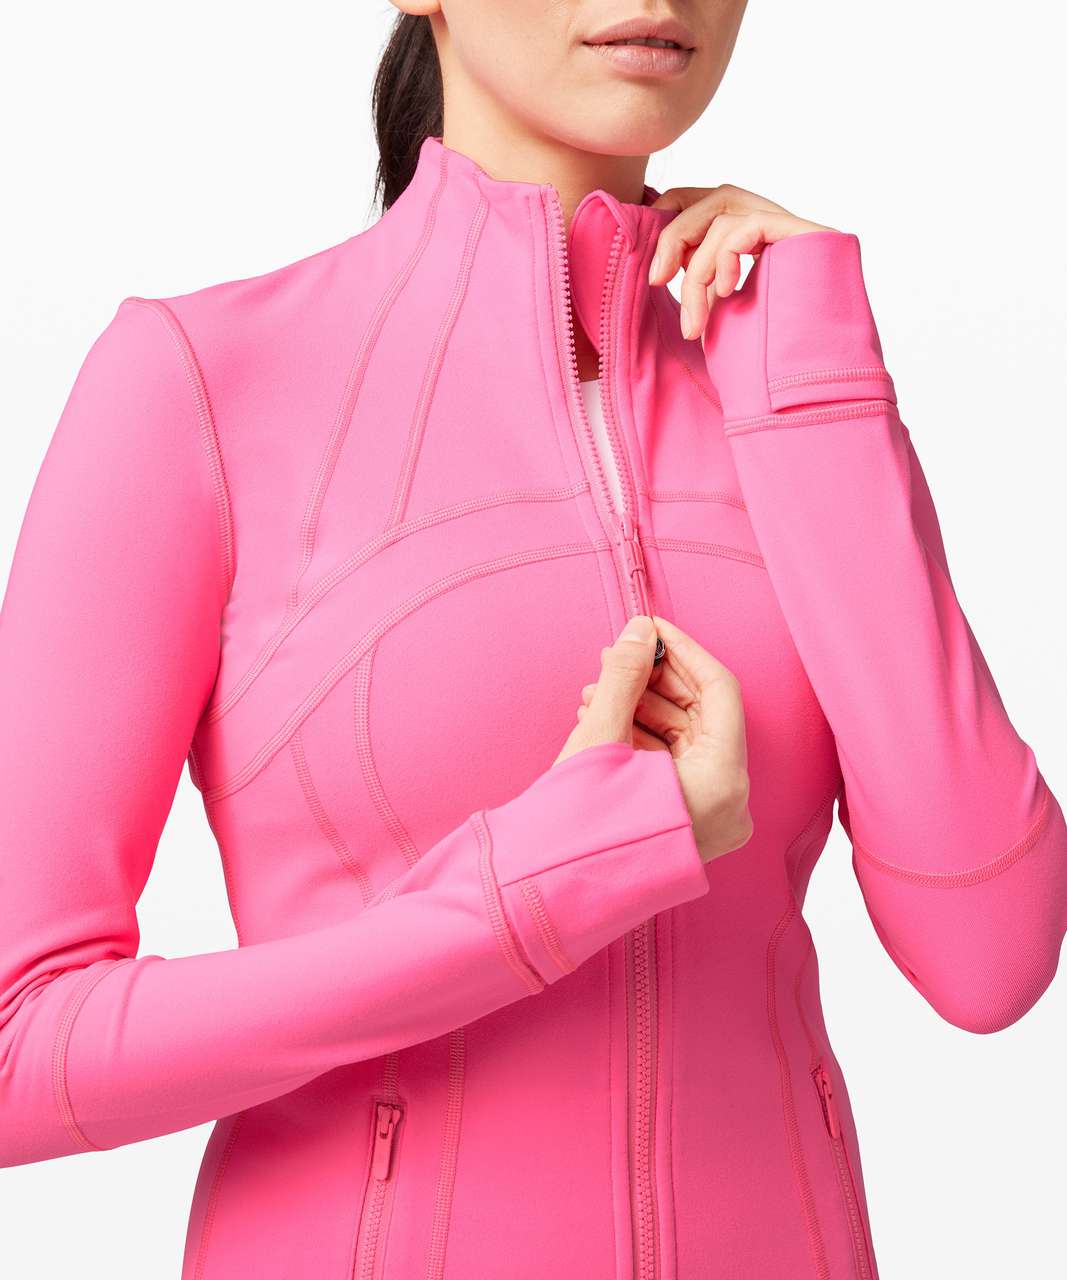 Lululemon Define Jacket Pink Size 12 - $70 - From kayla